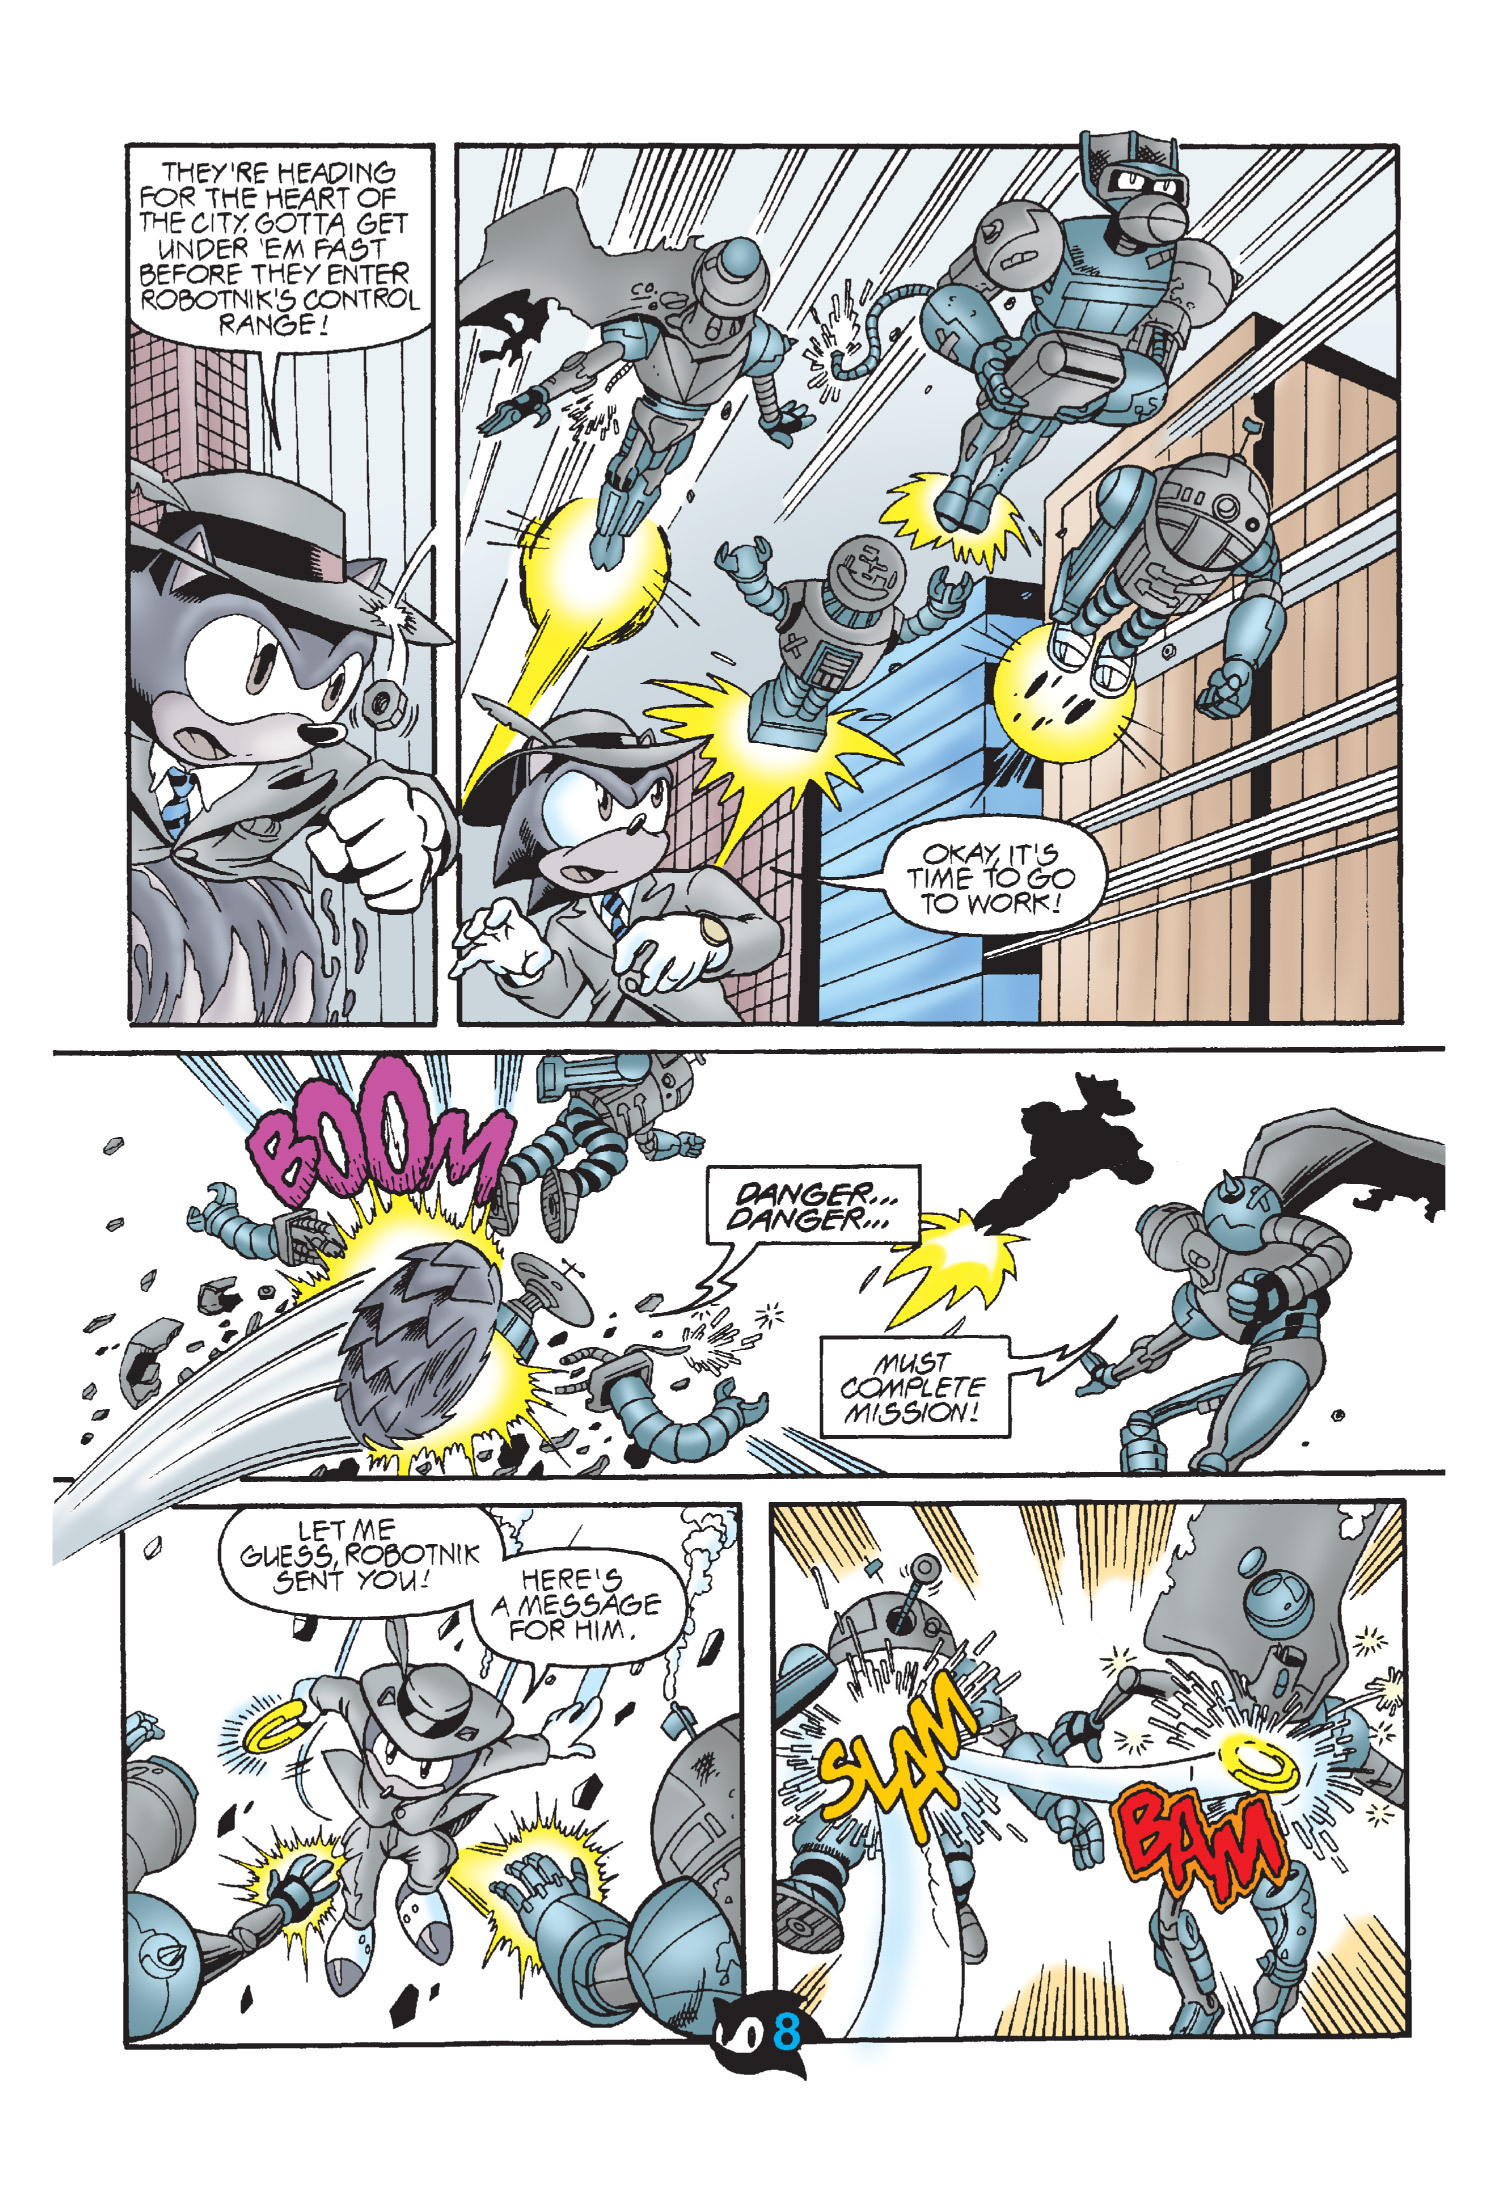 Super Comics: Sonic the Hedgehog (IDW) – #10 – The Reviewers Unite